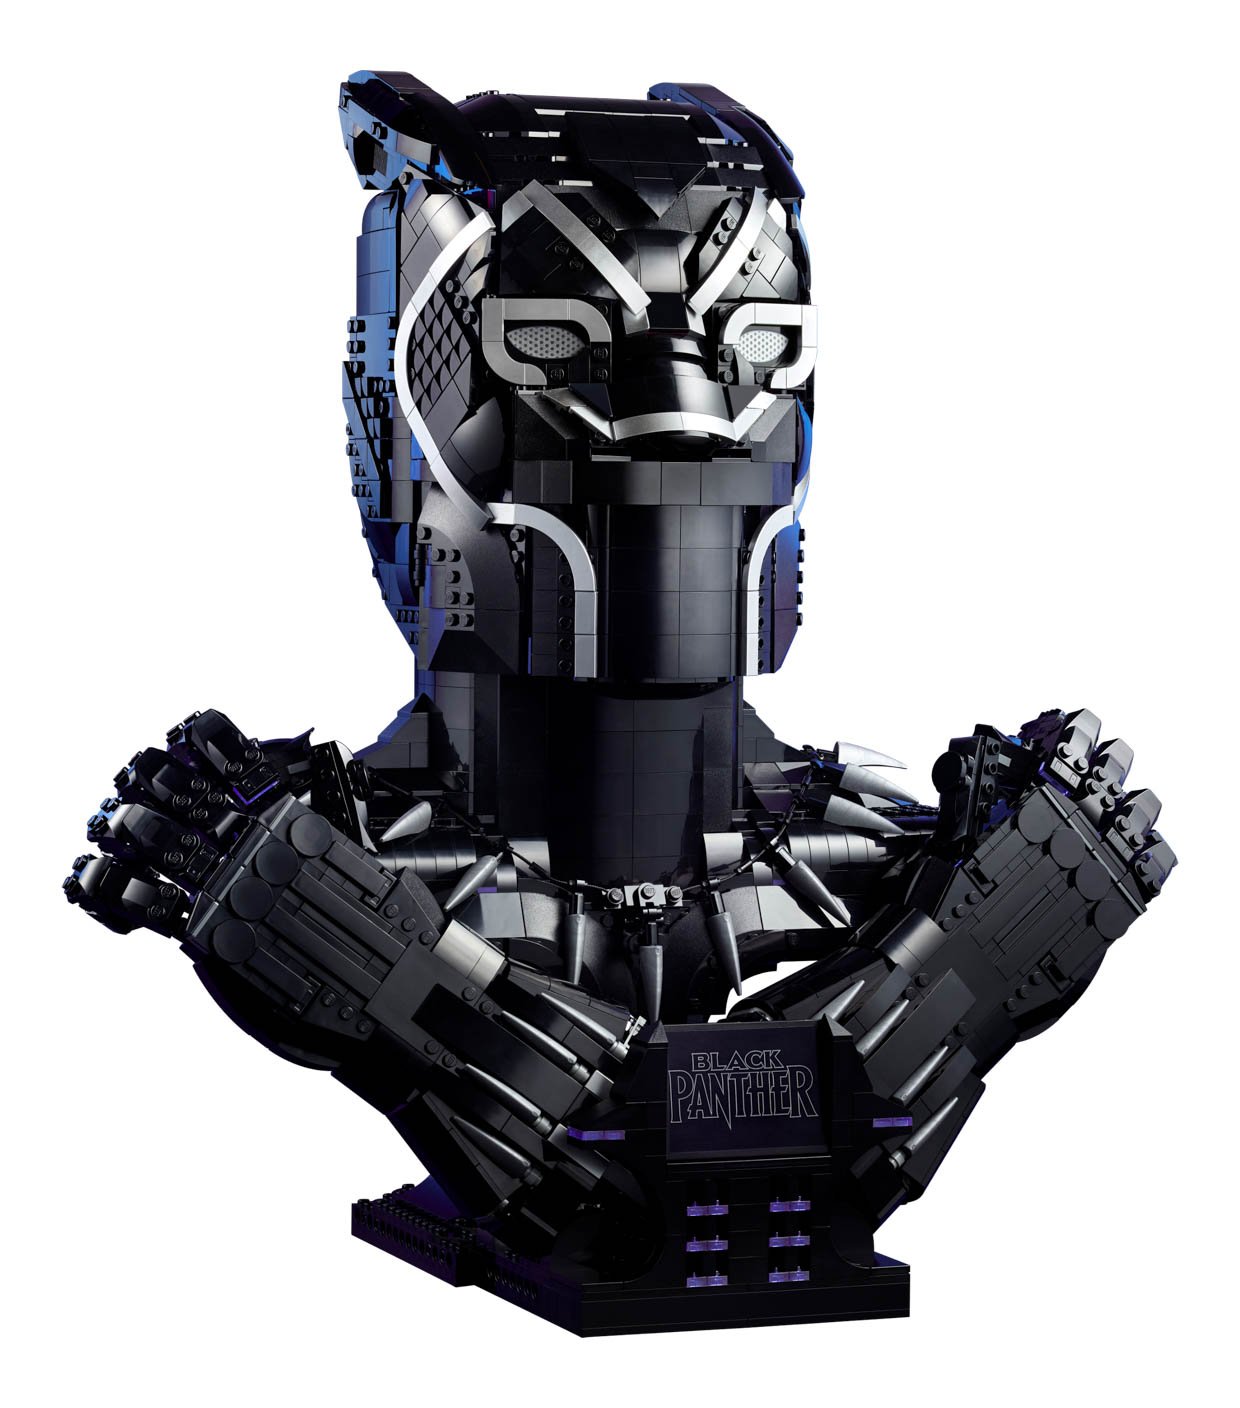 LEGO x Marvel Black Panther Bust